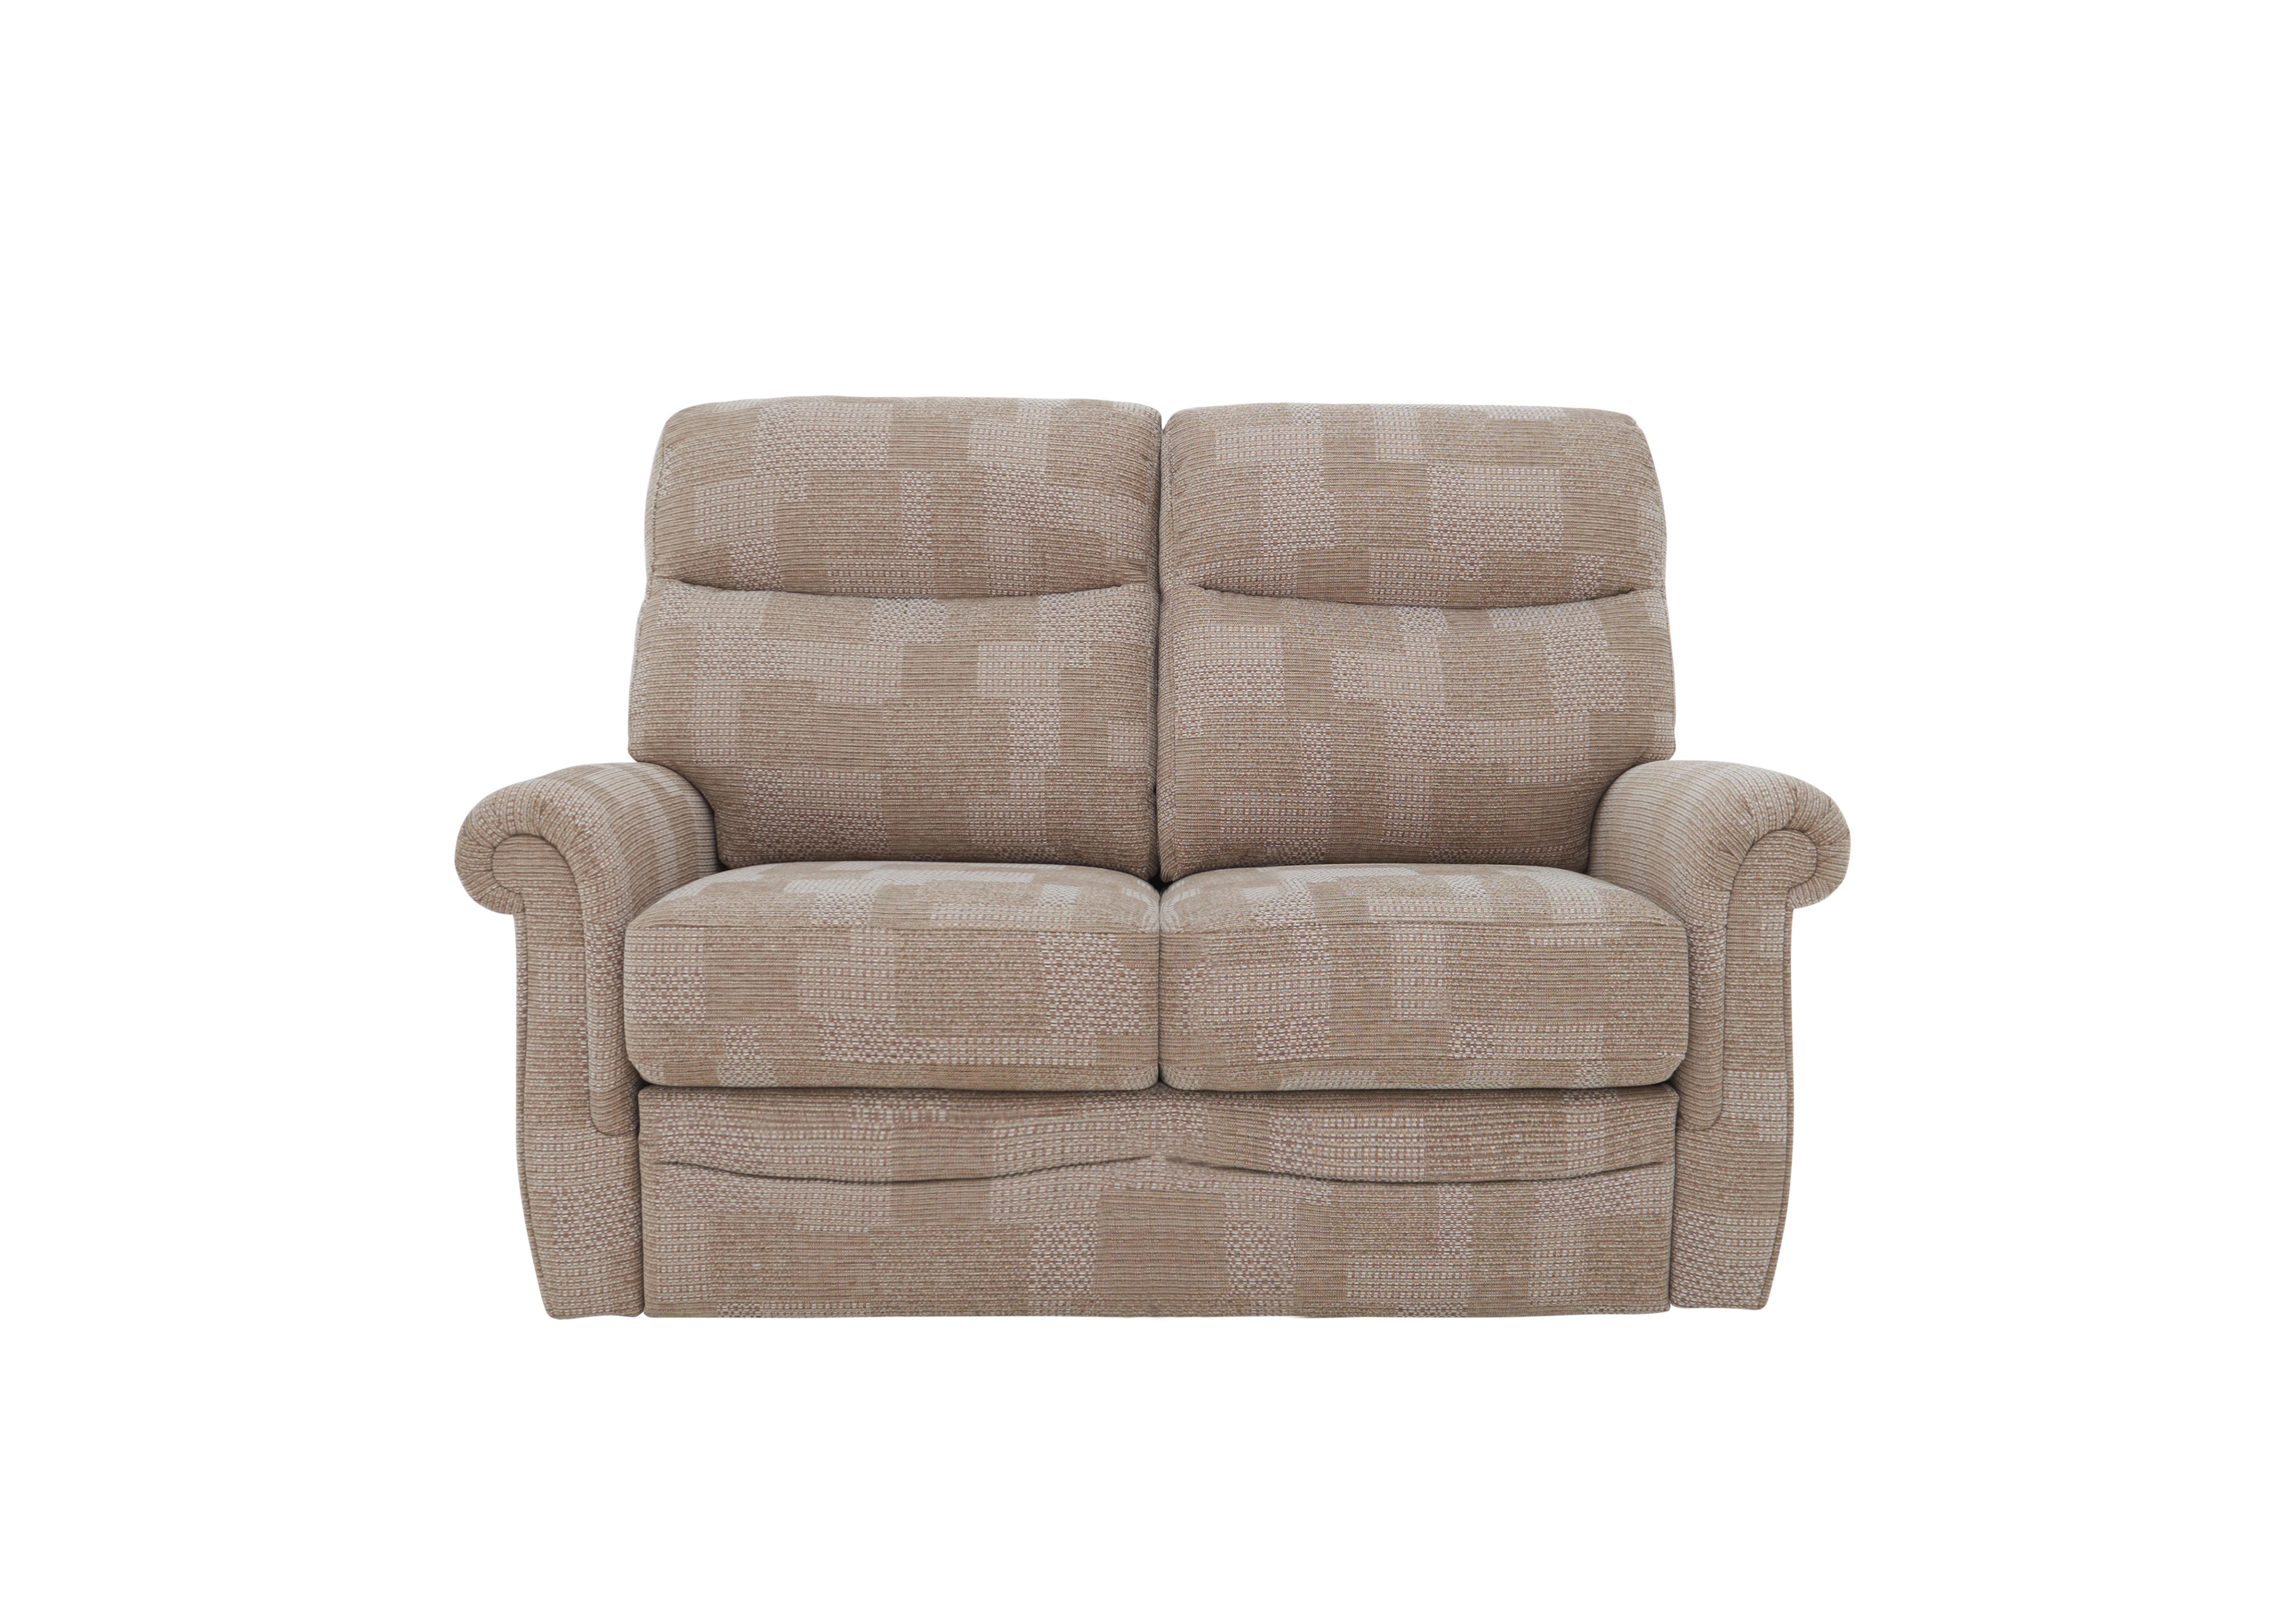 Avon Small 2 Seater Fabric Sofa in A800 Faro Sand on Furniture Village